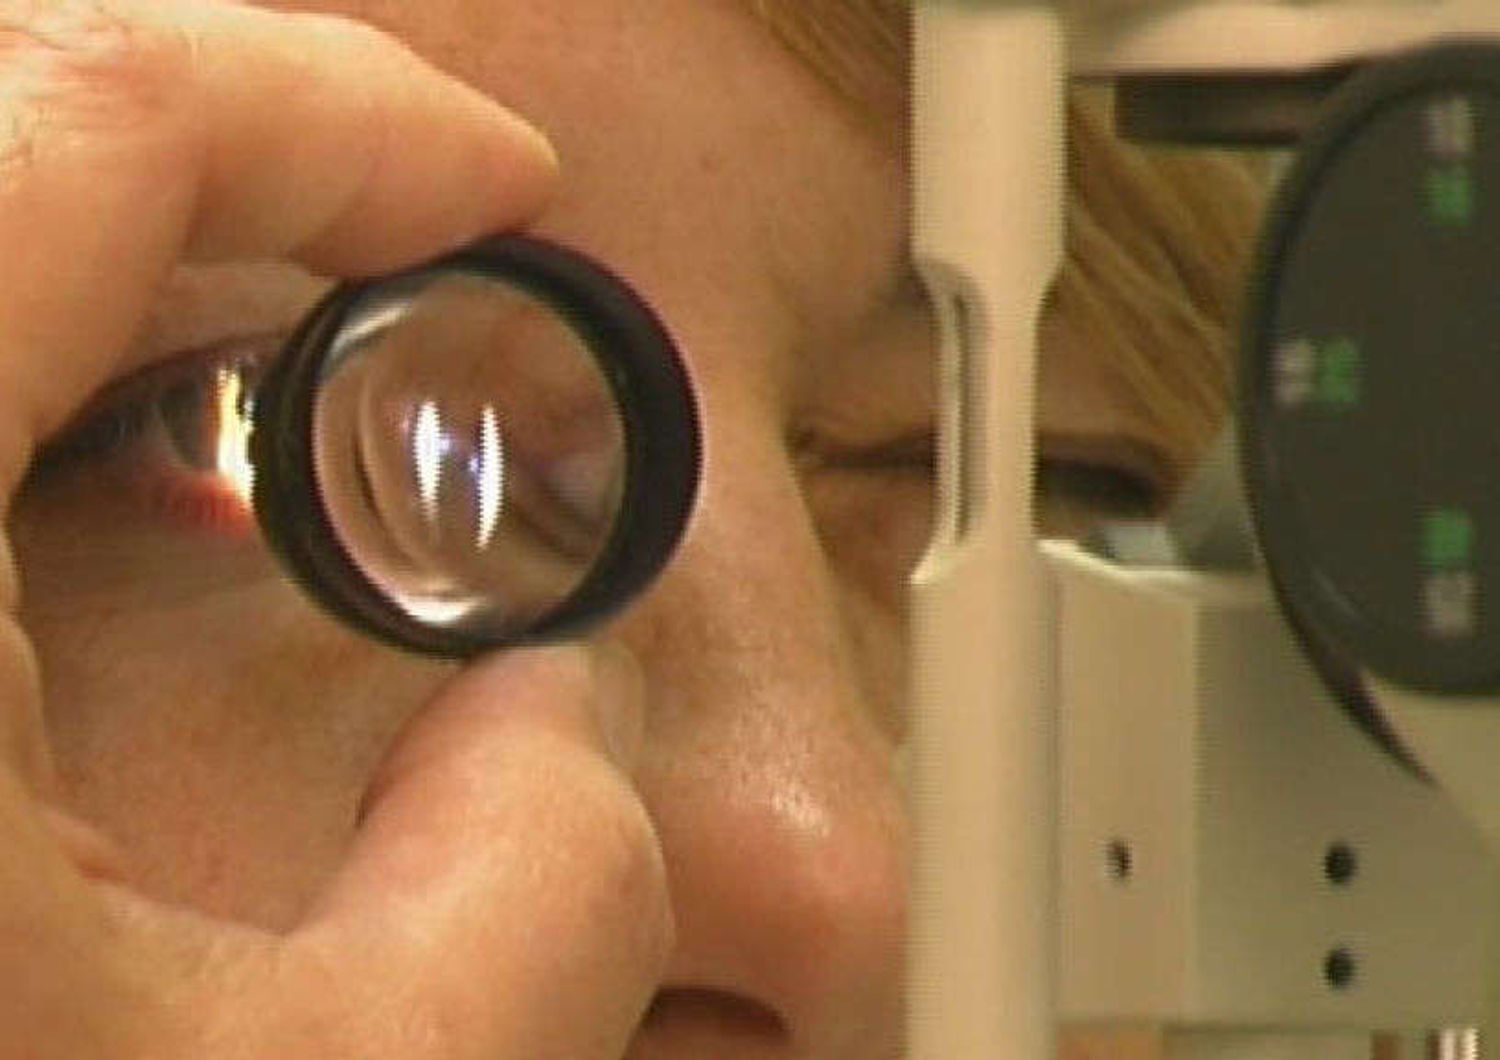 Medicina: glaucoma acuto e' una malattia infiammatoria